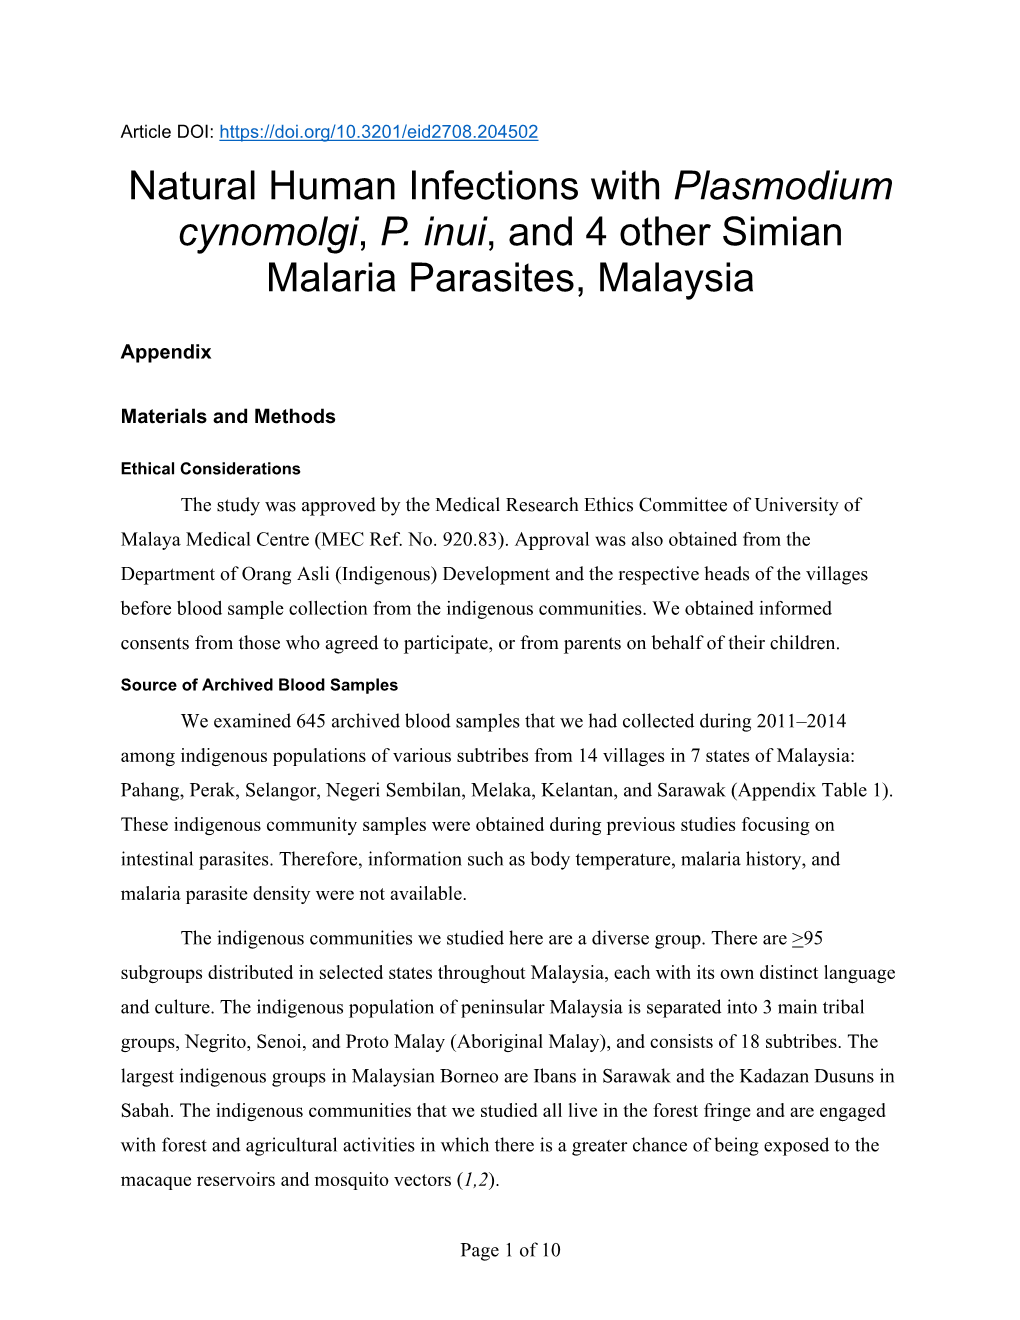 Natural Human Infections with Plasmodium Cynomolgi, P